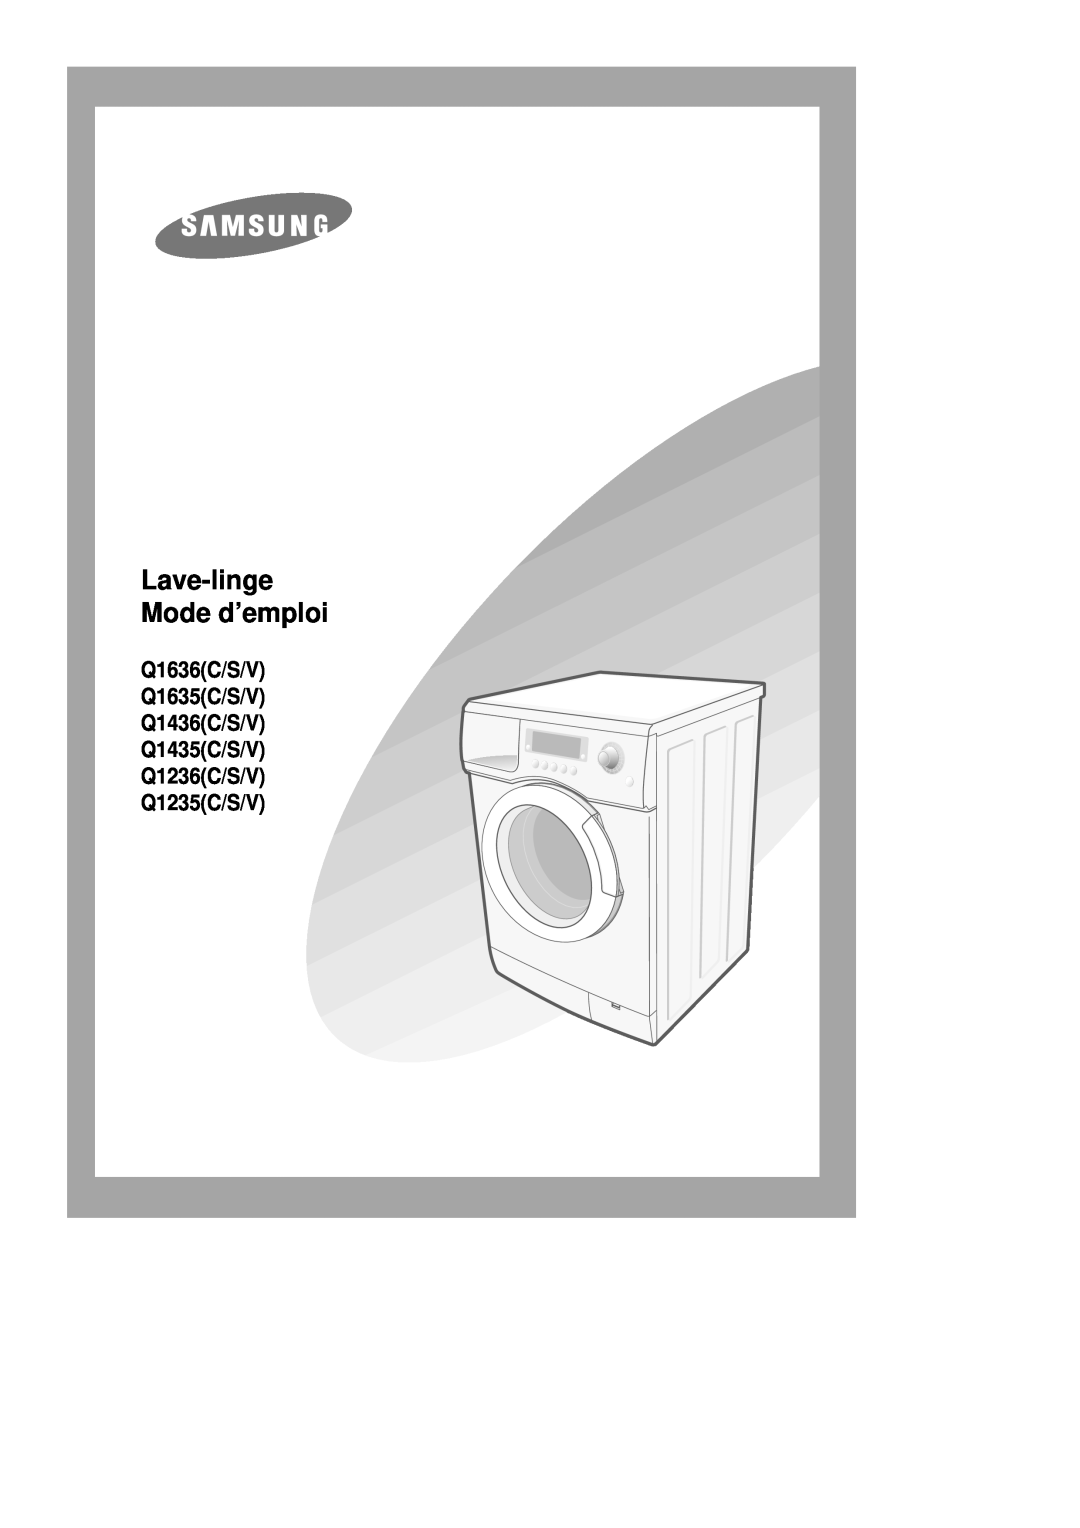 Samsung Q1435VGW1/XEF manual Washing Machine Owner’s Instructions, Q1636C/S/V Q1436C/S/V Q1435C/S/V Q1236C/S/V Q1235C/S/V 